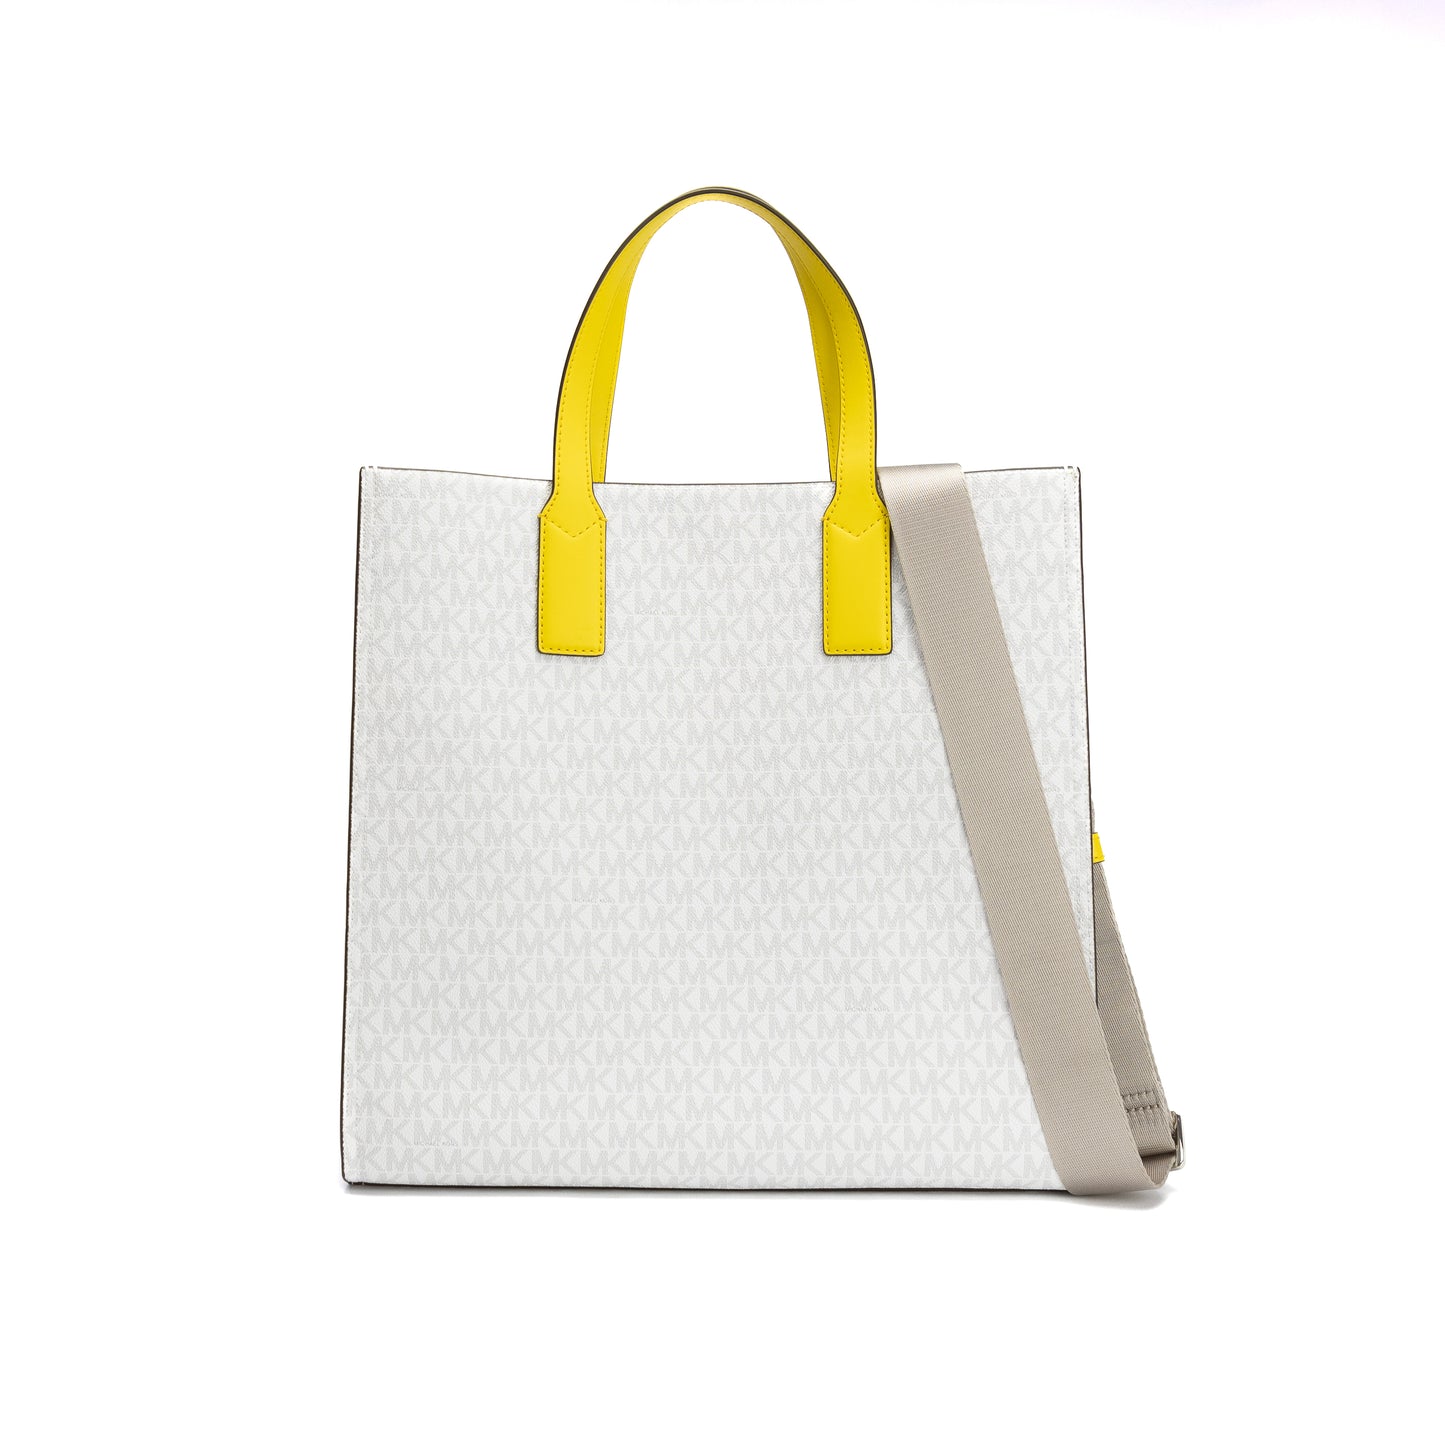 Michael Kors Kenly Large Logo Tote Bag - White/Citrus Yellow - 193599756592